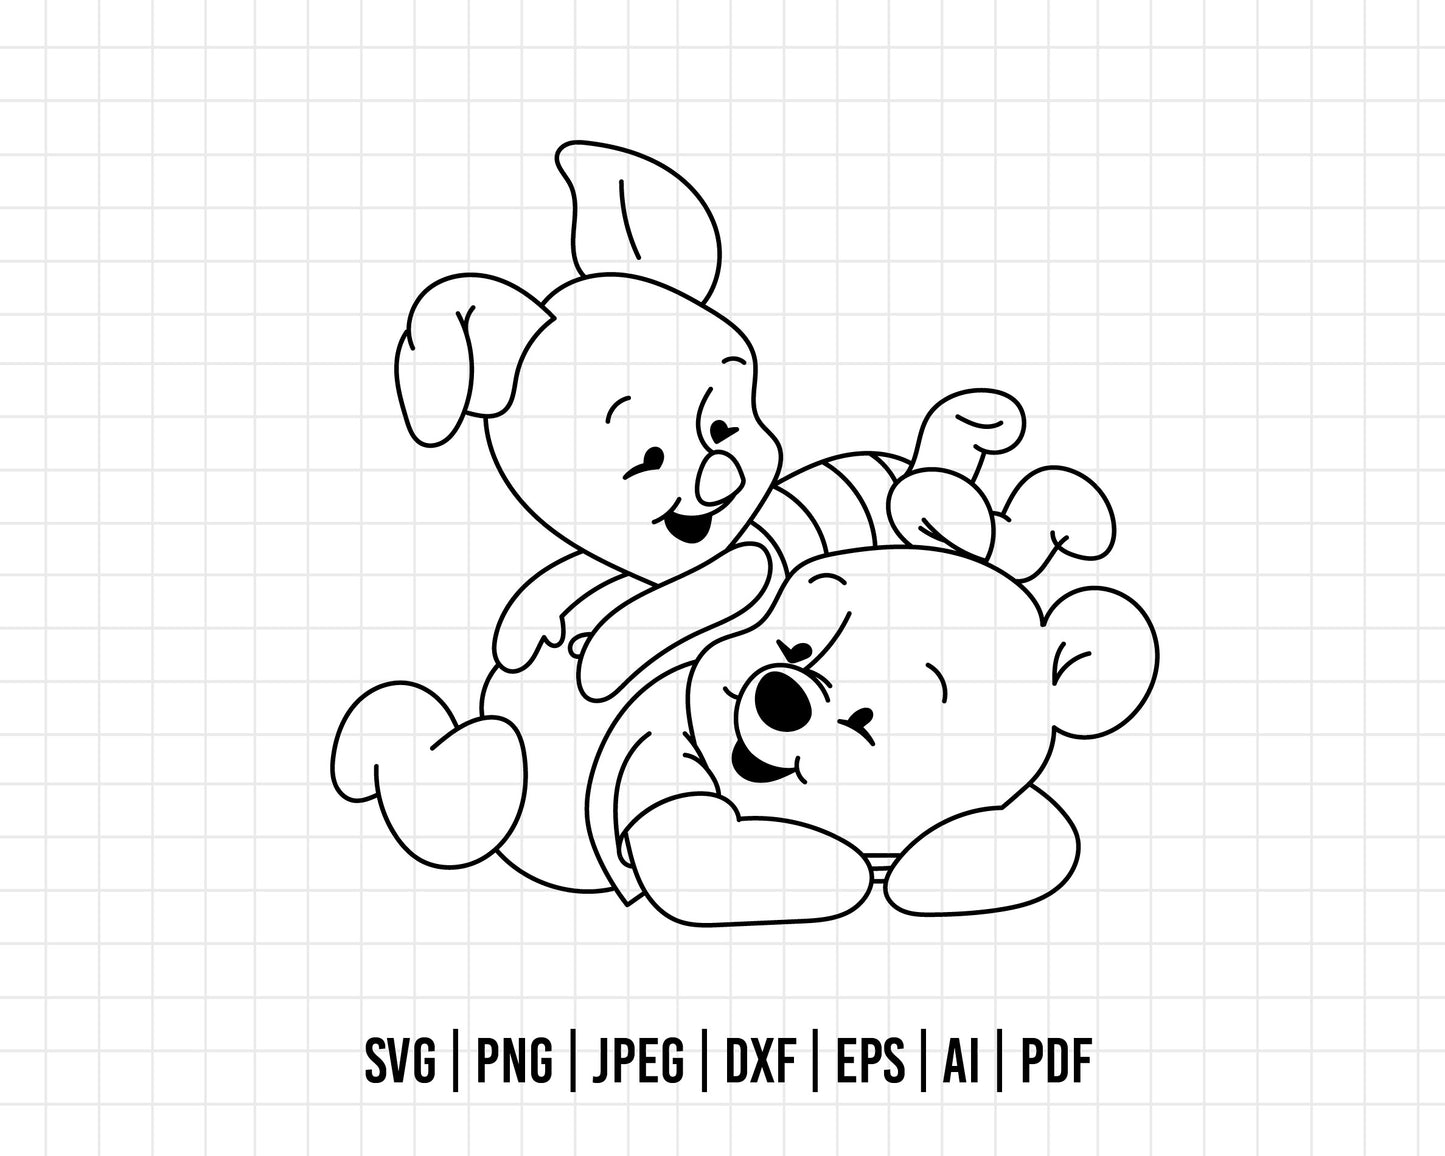 COD386- Piglet and pooh svg, Winnie the pooh svg, disney svg